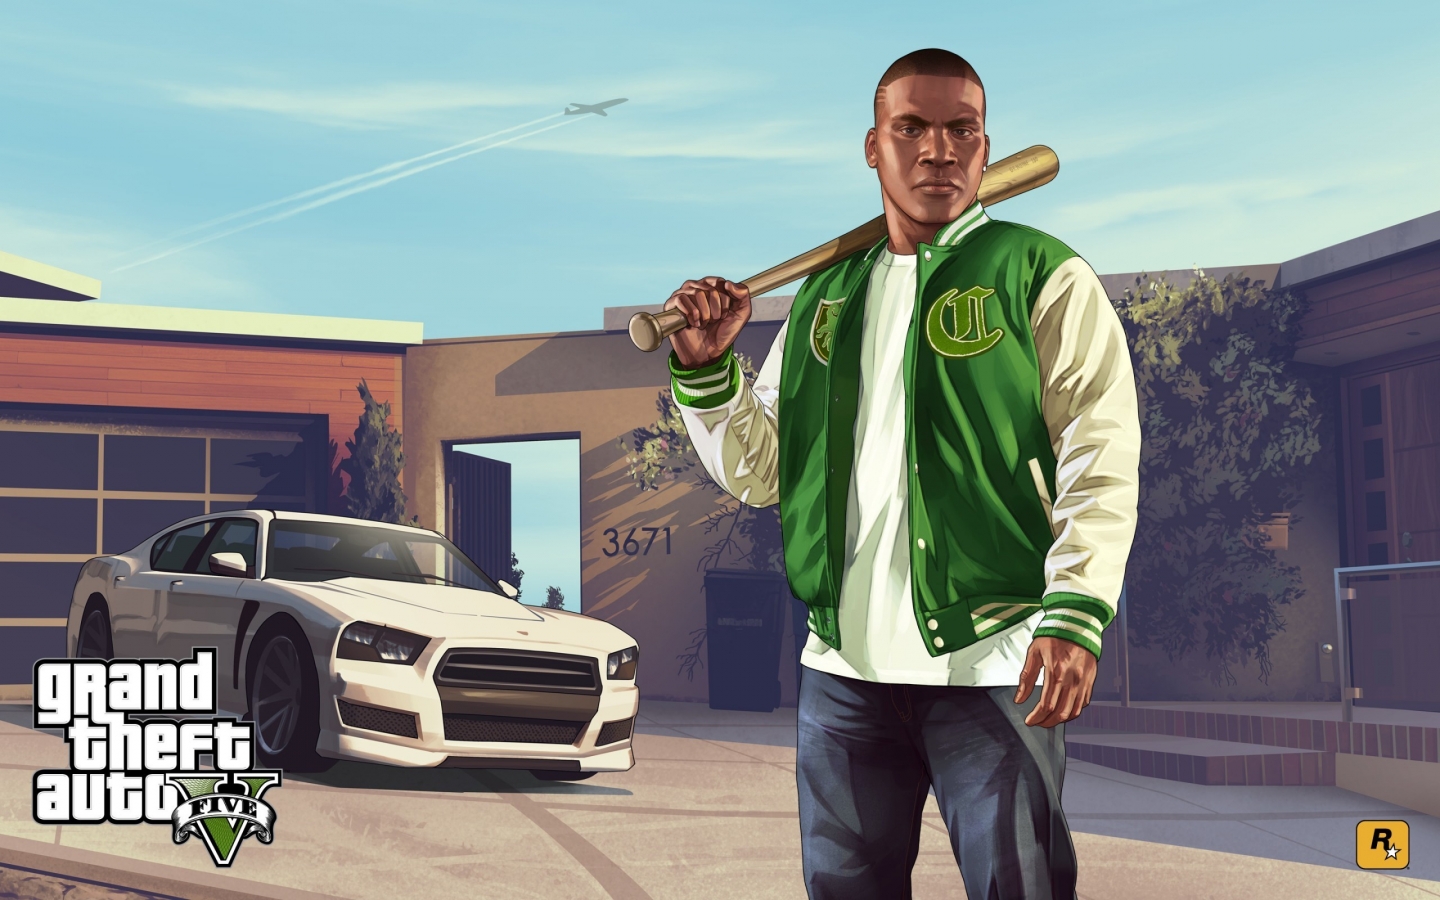 Grand Theft Auto V for 1440 x 900 widescreen resolution